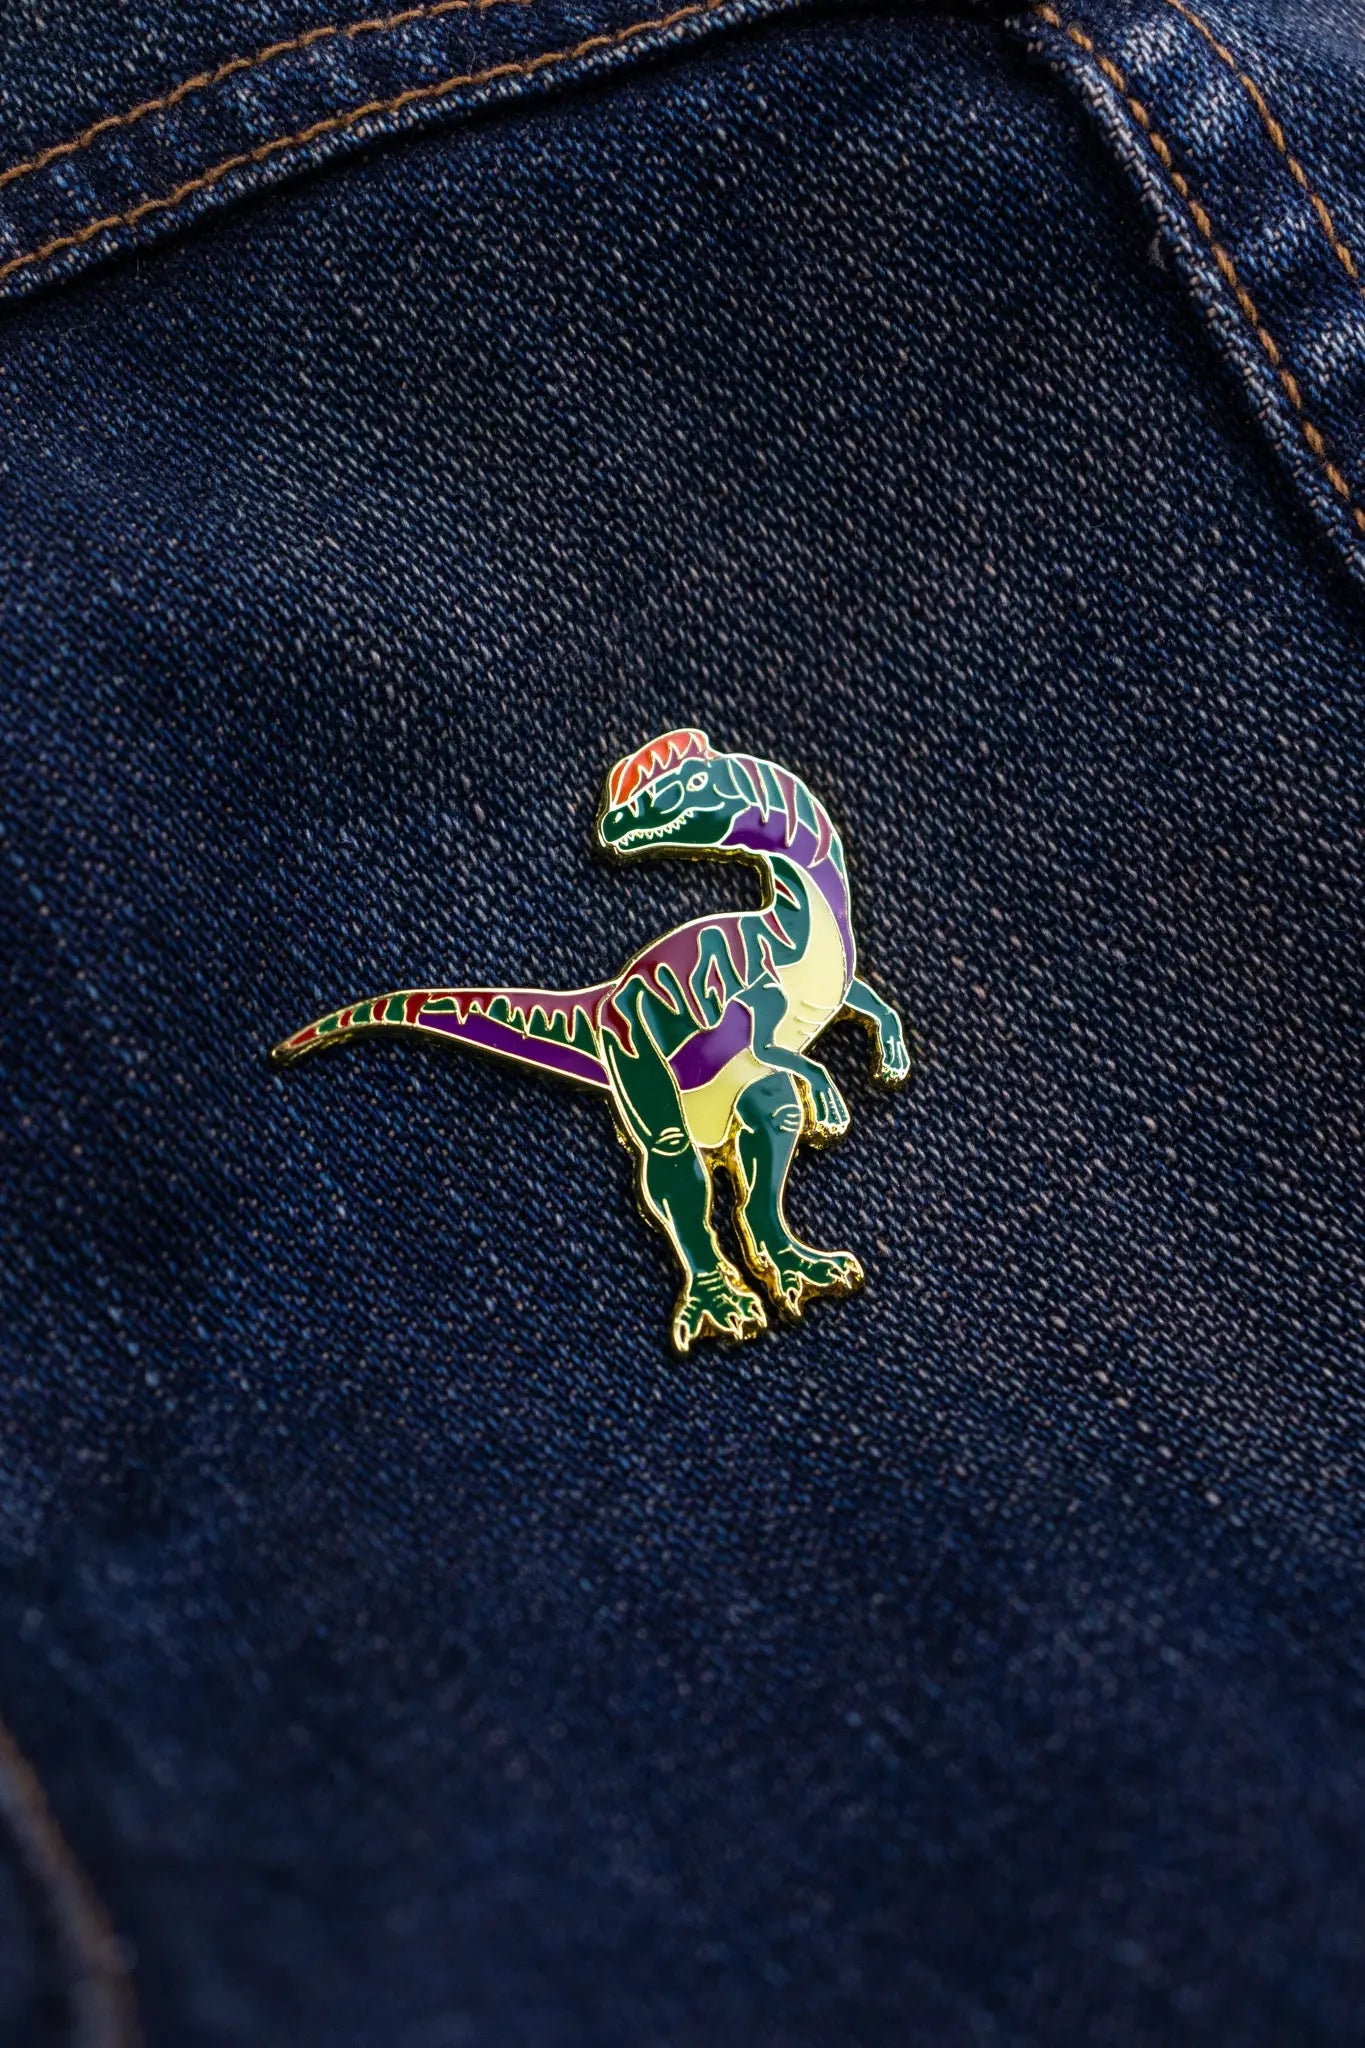 Dilophosaurus Pin